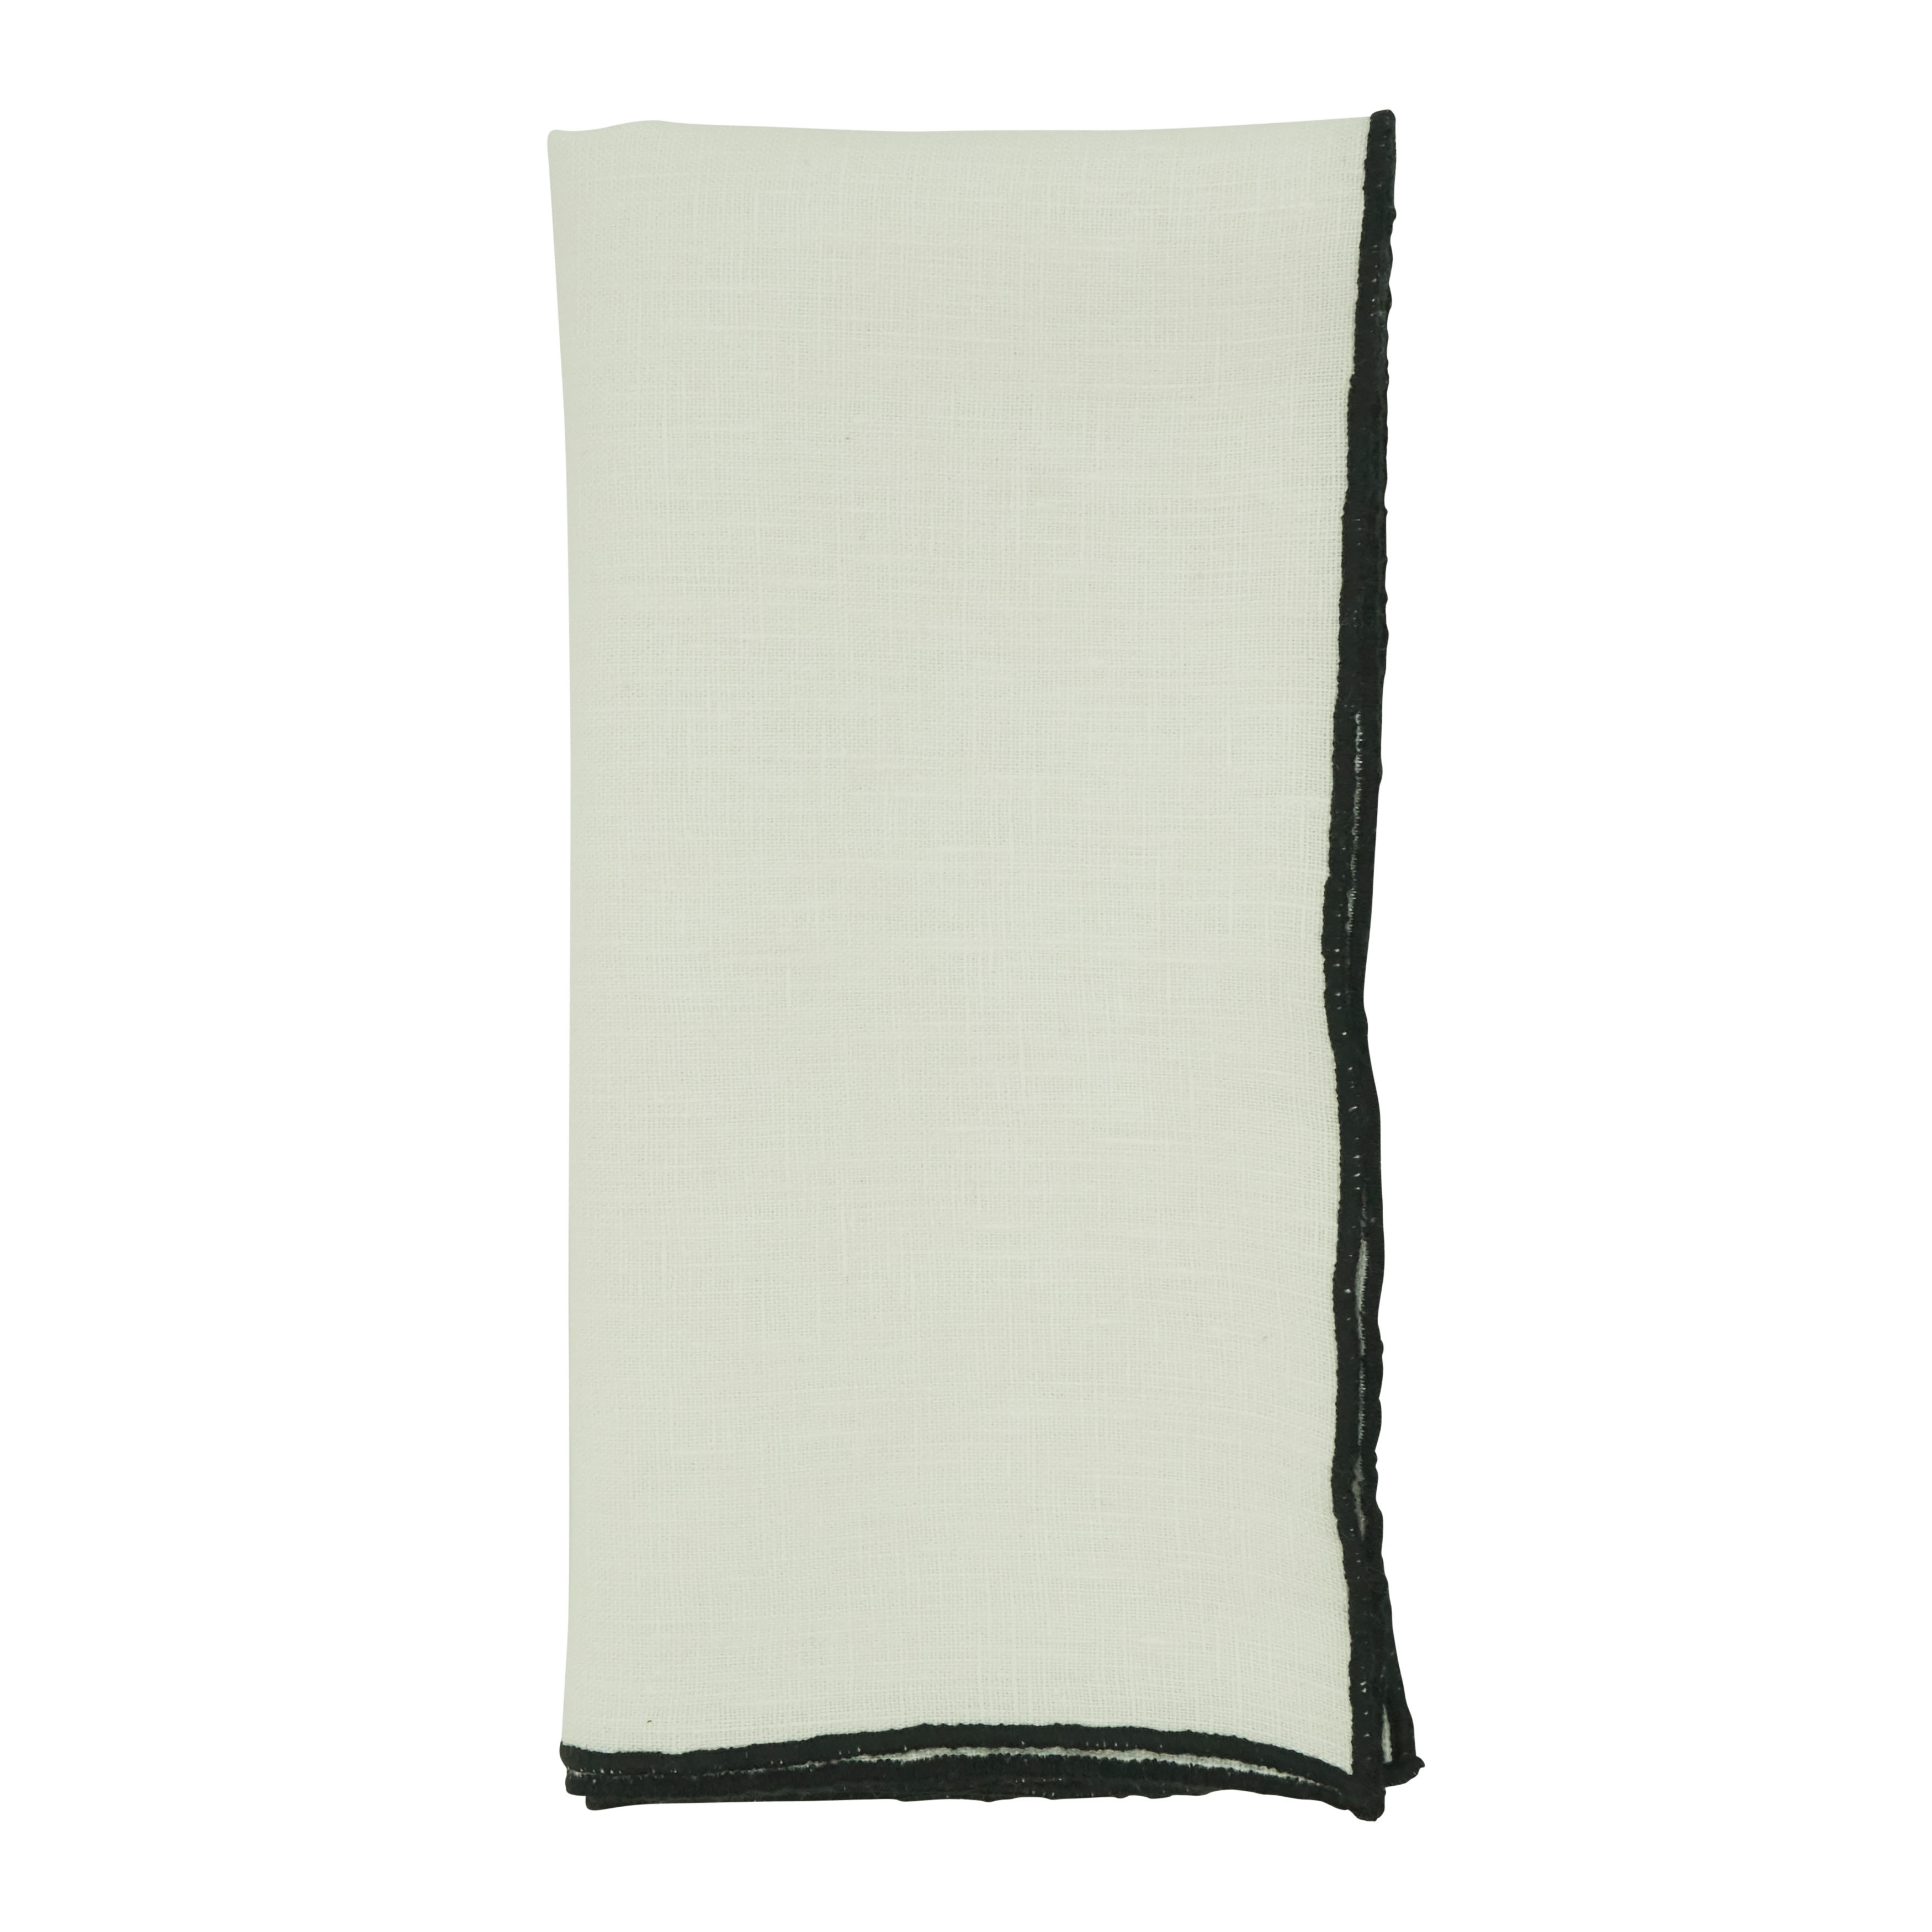 SET OF 6 - STONE WASHED LINEN NAPKINS // WHITE + BLACK TRIM Cloth